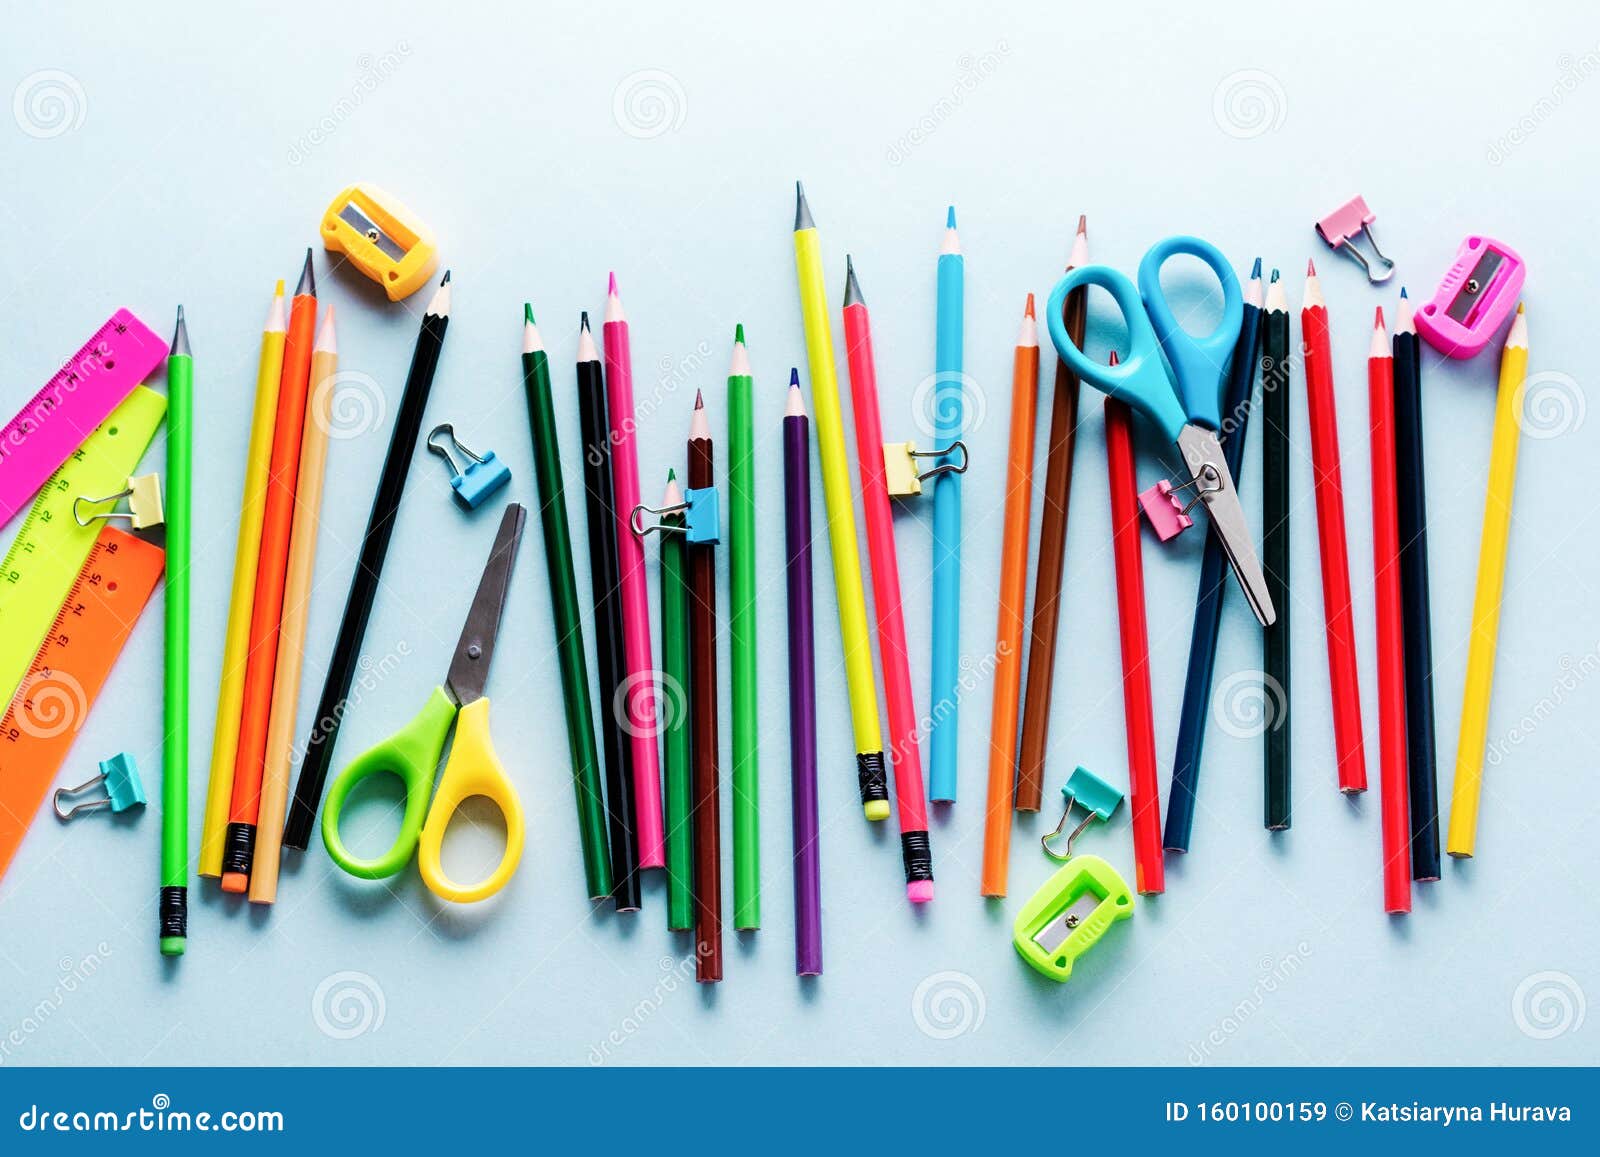 Erasers,Sharpeners Stationary Pencil School Stationery Set Pens,Pencils,Ruler 